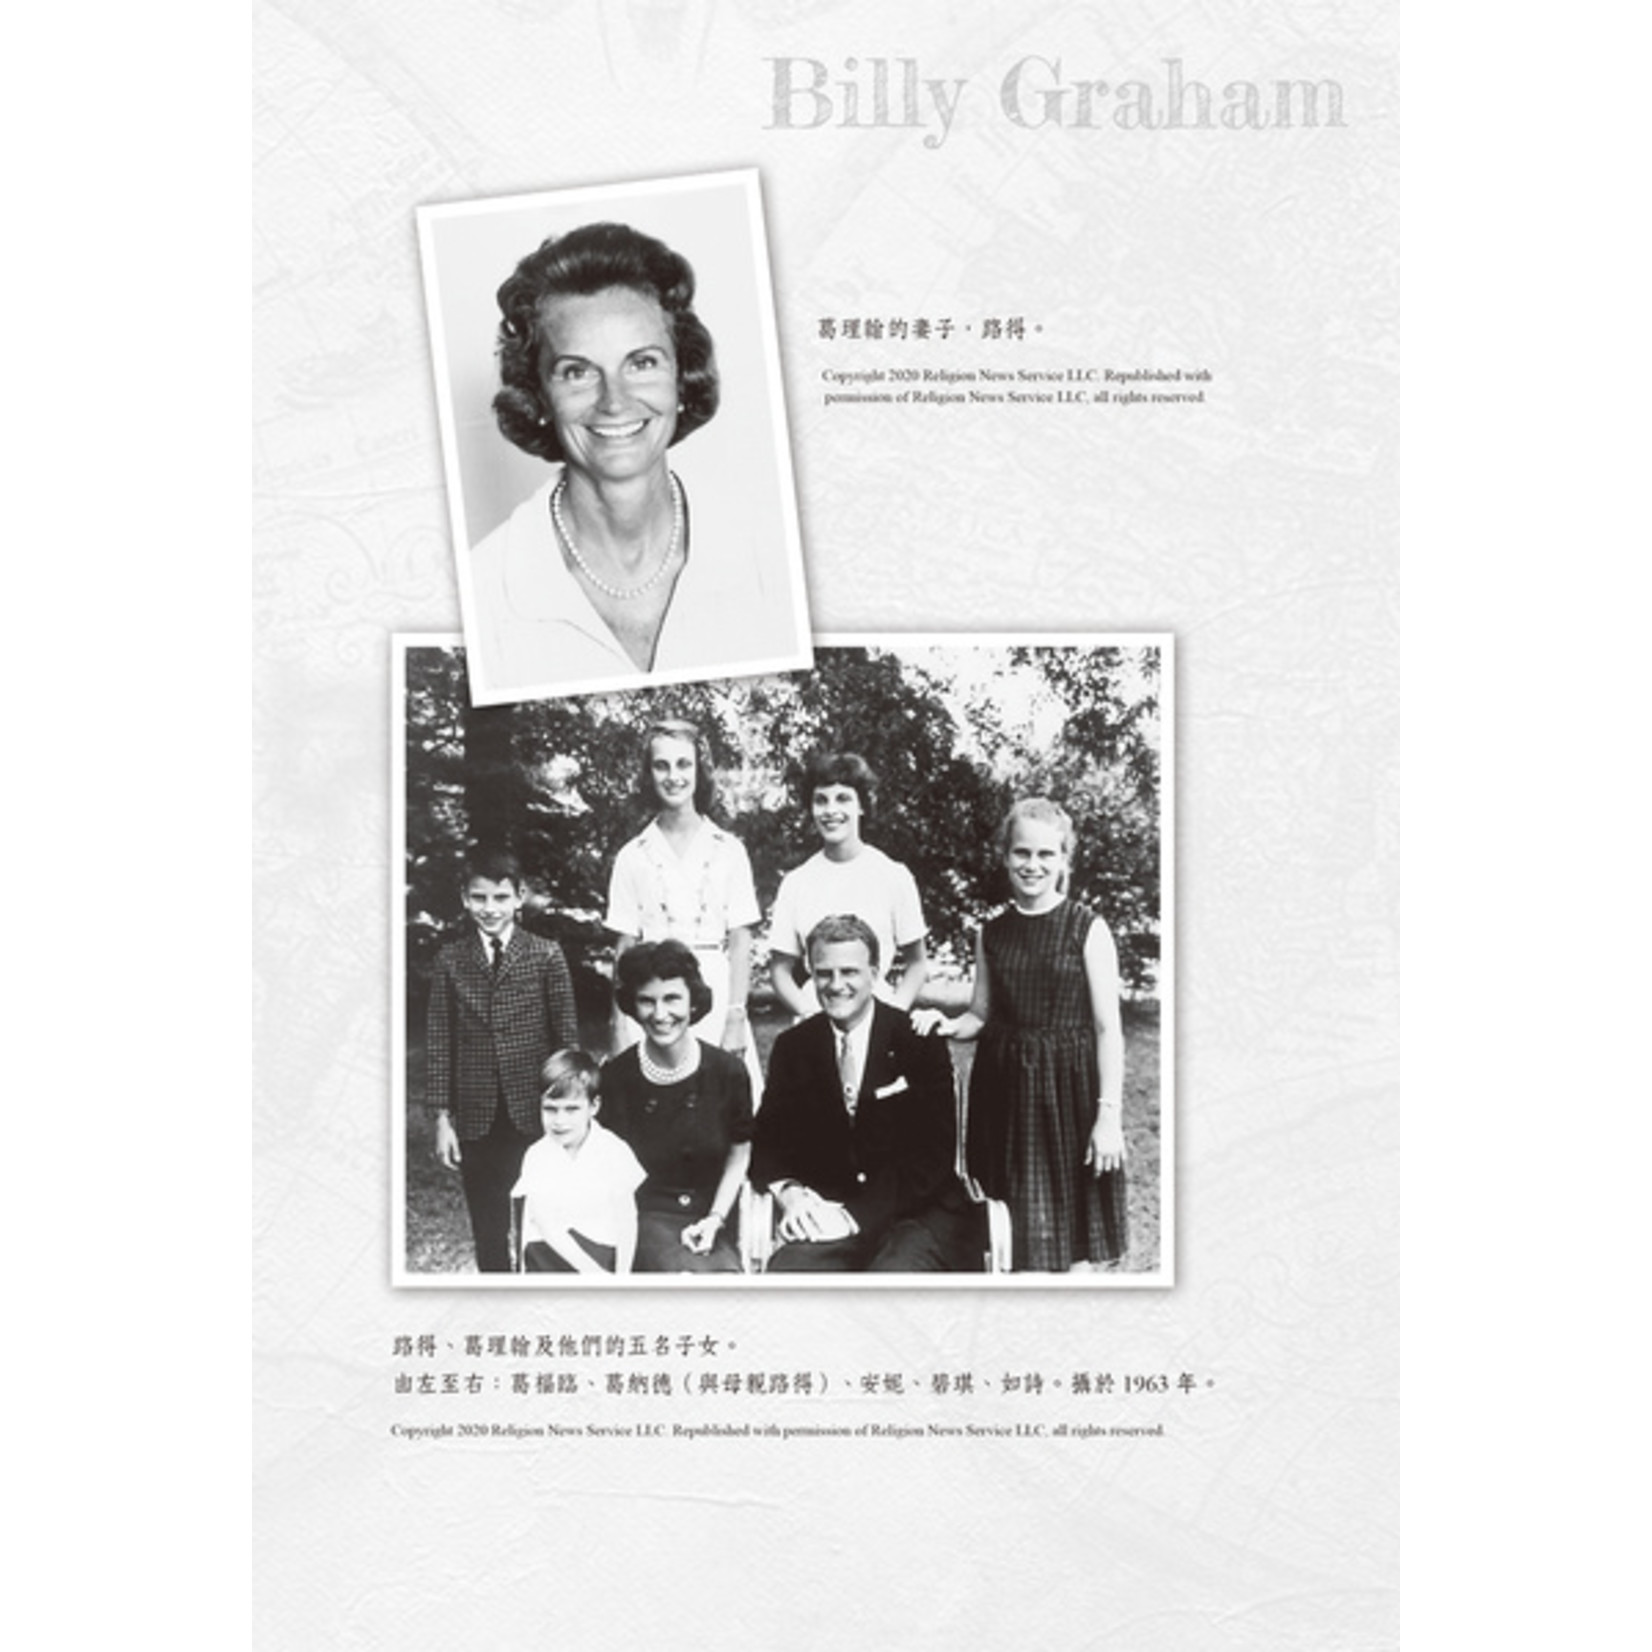 道聲 Taosheng Taiwan 我只是改變地址－葛理翰 A Prophet with Honor: The Billy Graham Story